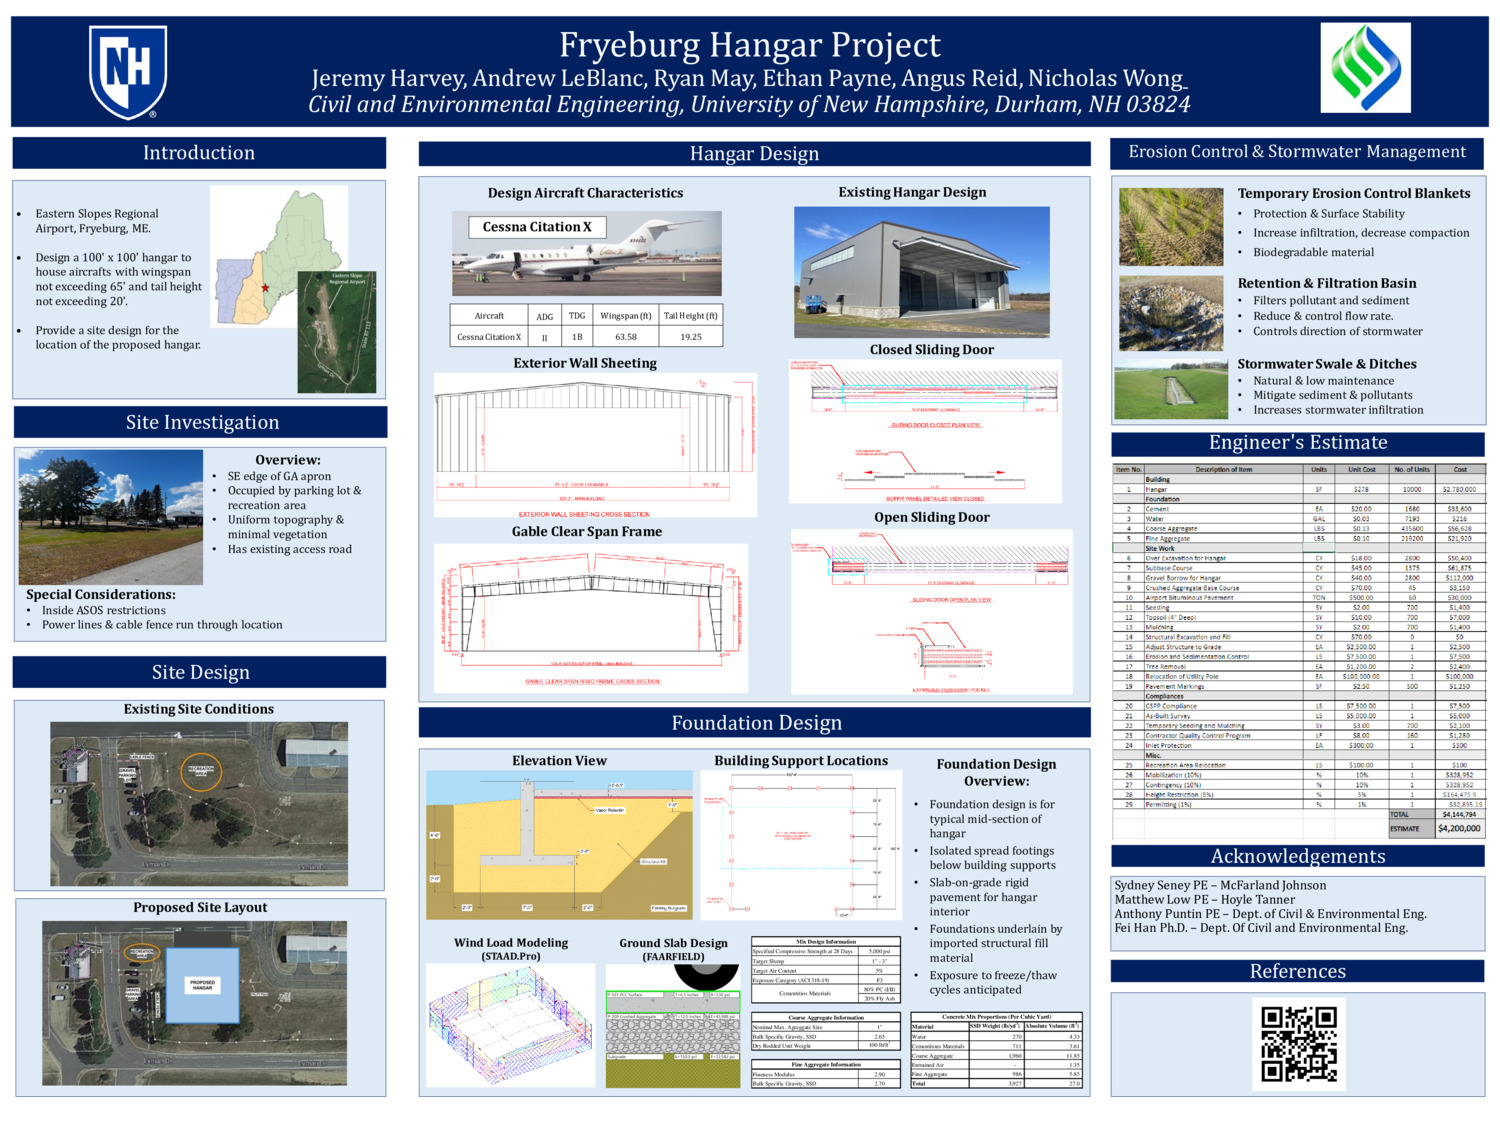 Fryeburg Hangar Project by rkm1016